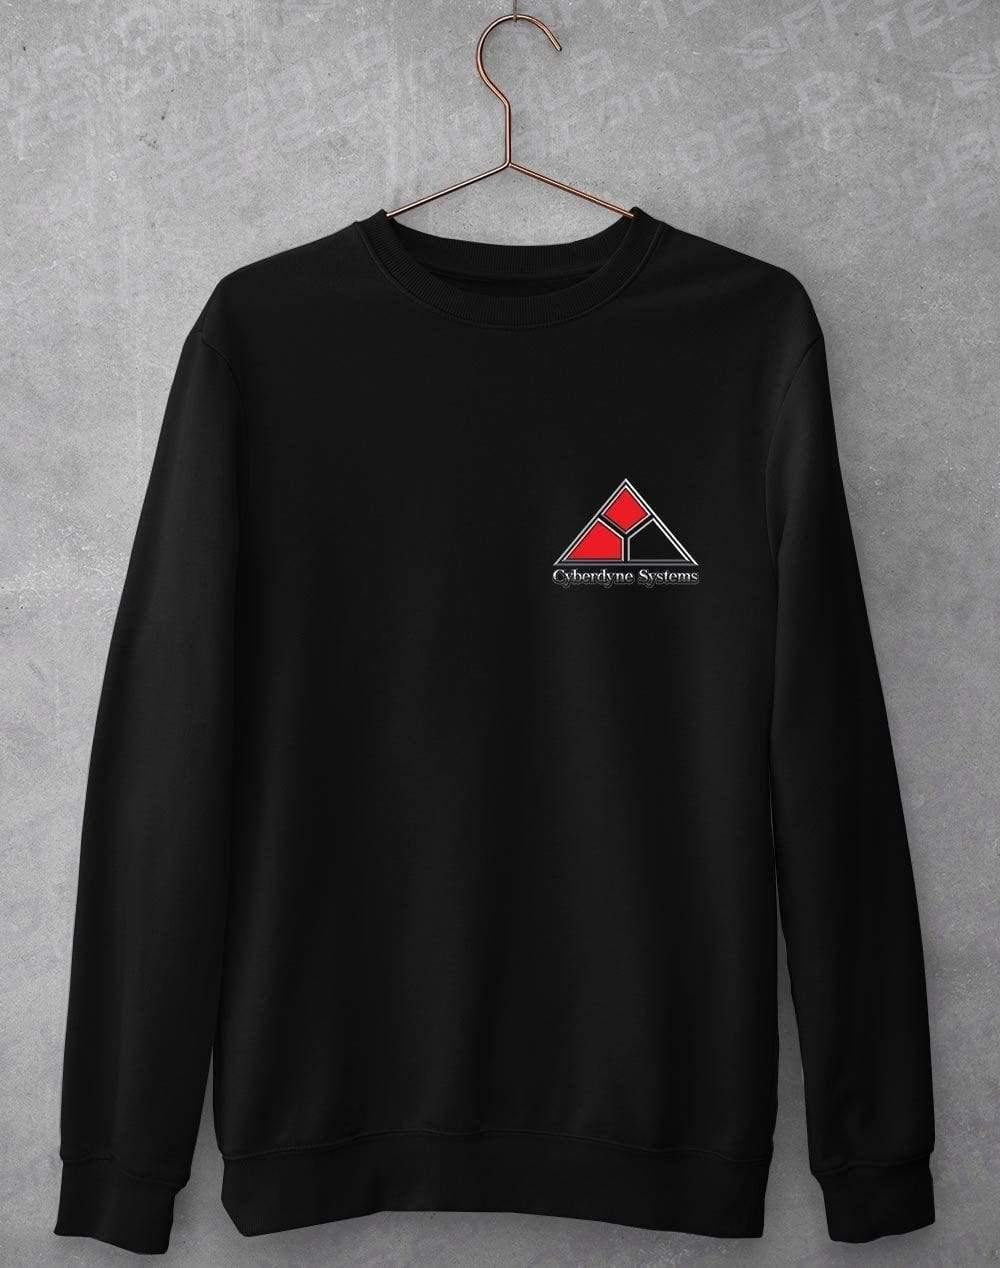 Cyberdyne Systems Pocket Print Sweatshirt S / Black  - Off World Tees